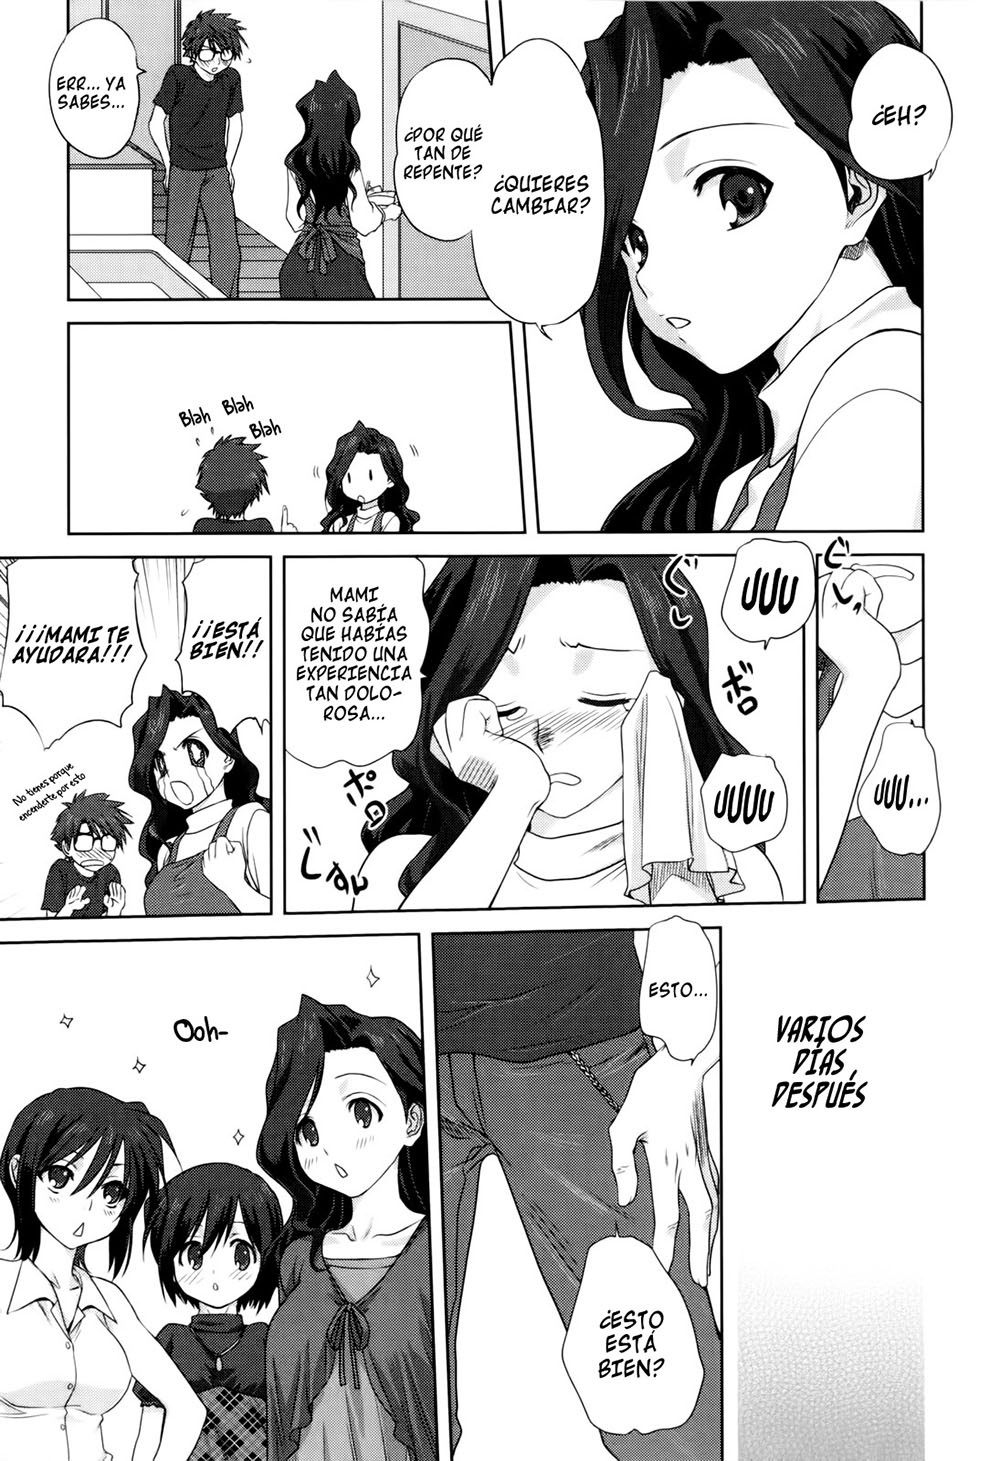 La Familia al Completo #2 - 6 - Comics Porno - Hentai Manga - Cartoon XXX